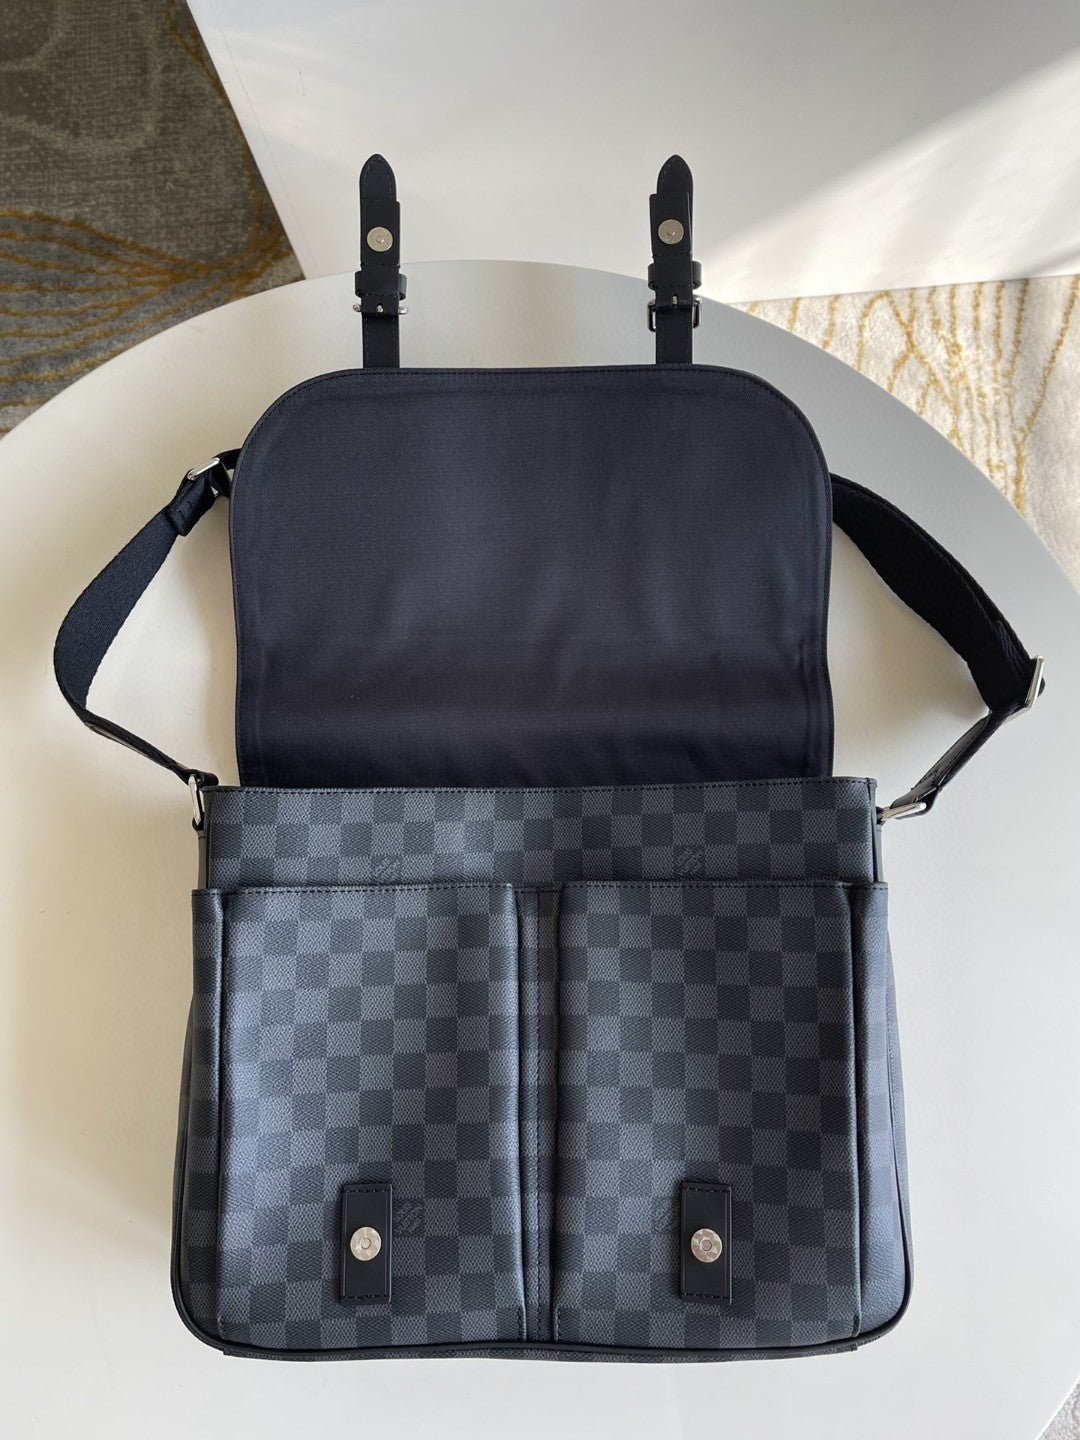 LV Christopher Messenger Bag Damier Graphite Canvas For Men, Bags, Shoulder And Crossbody Bags 13in/33cm LV N41500